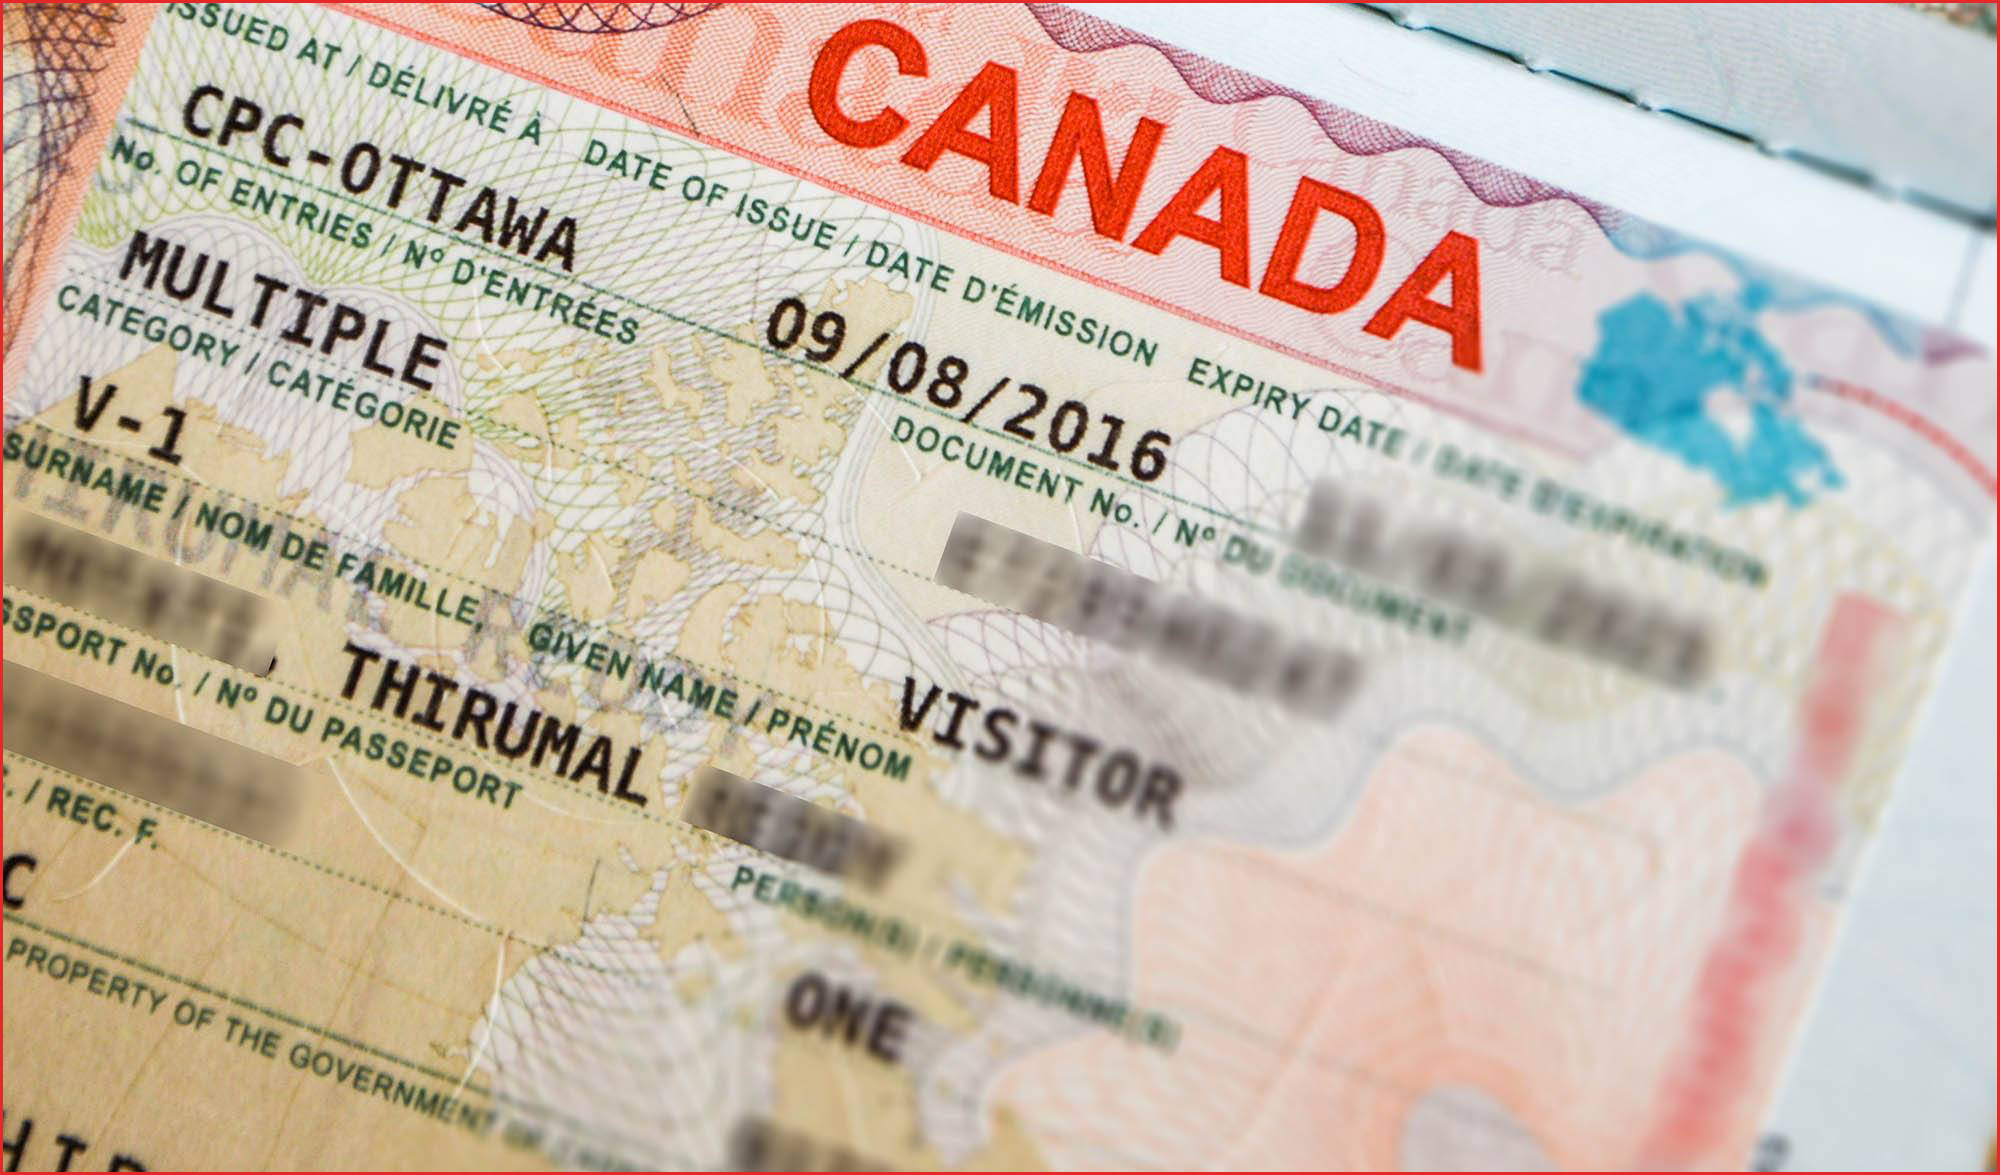 canadian visit us visa